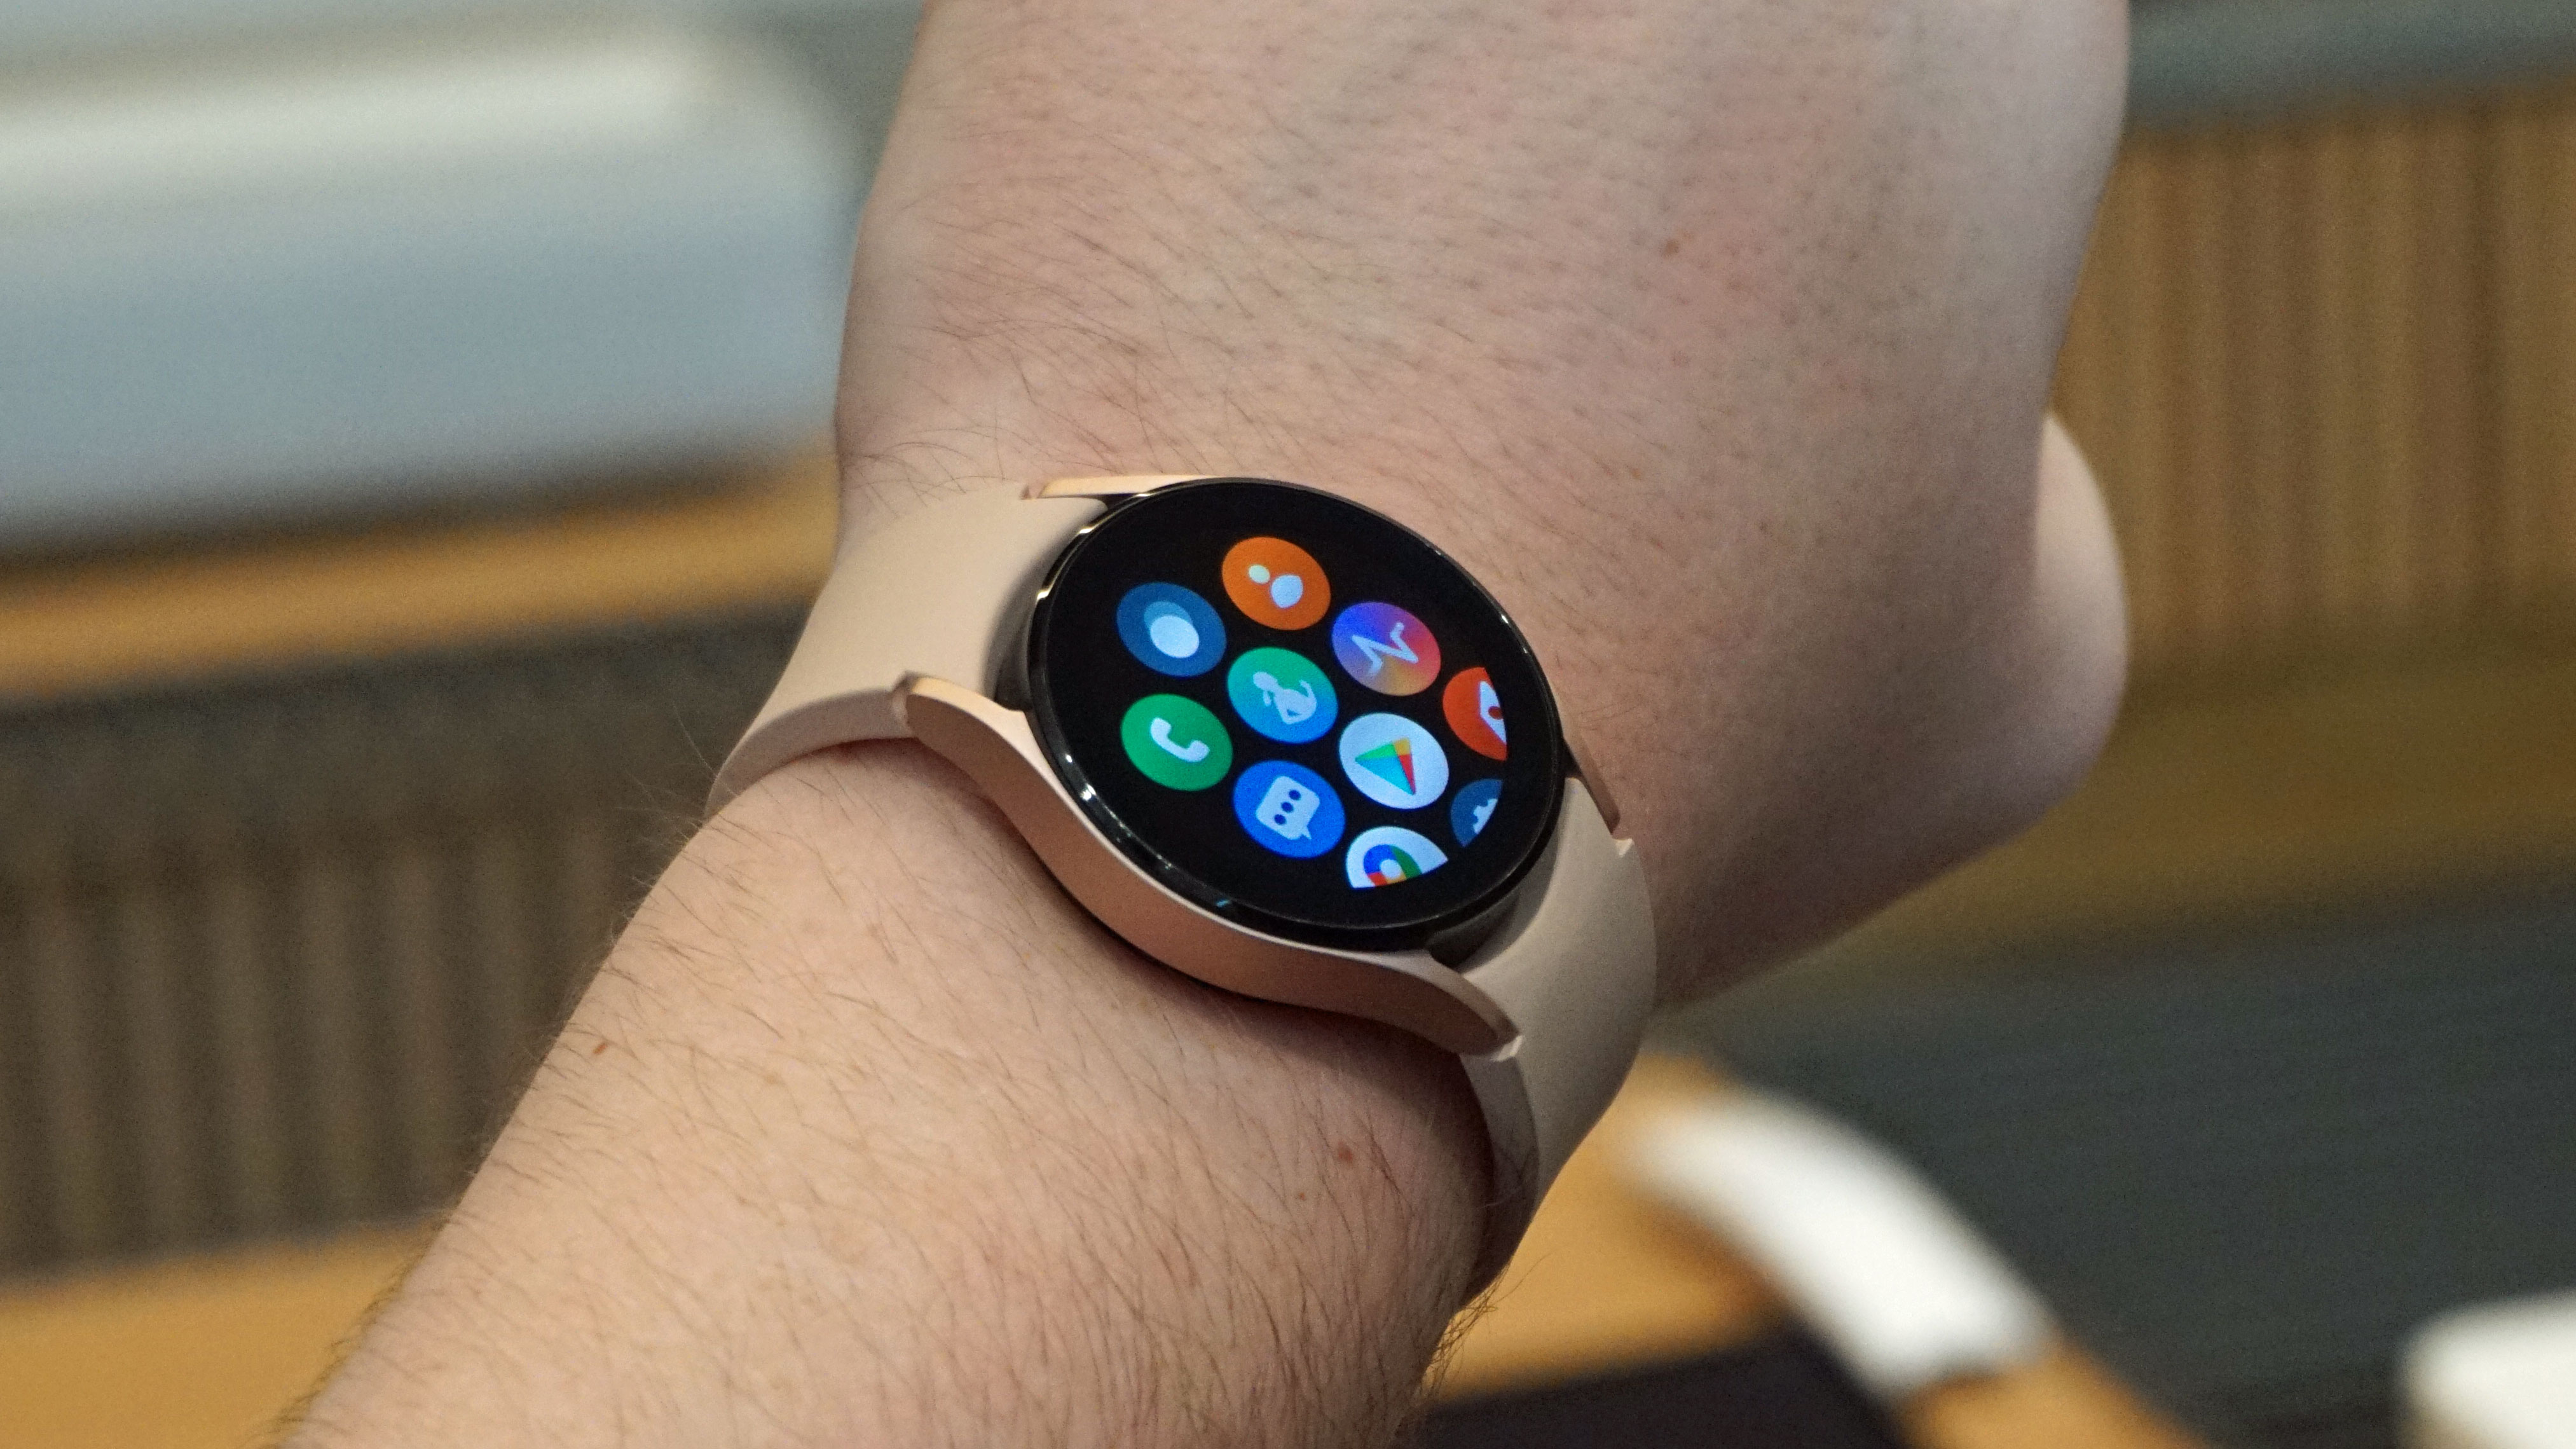 Samsung Galaxy Watch 4 on a person's wrist